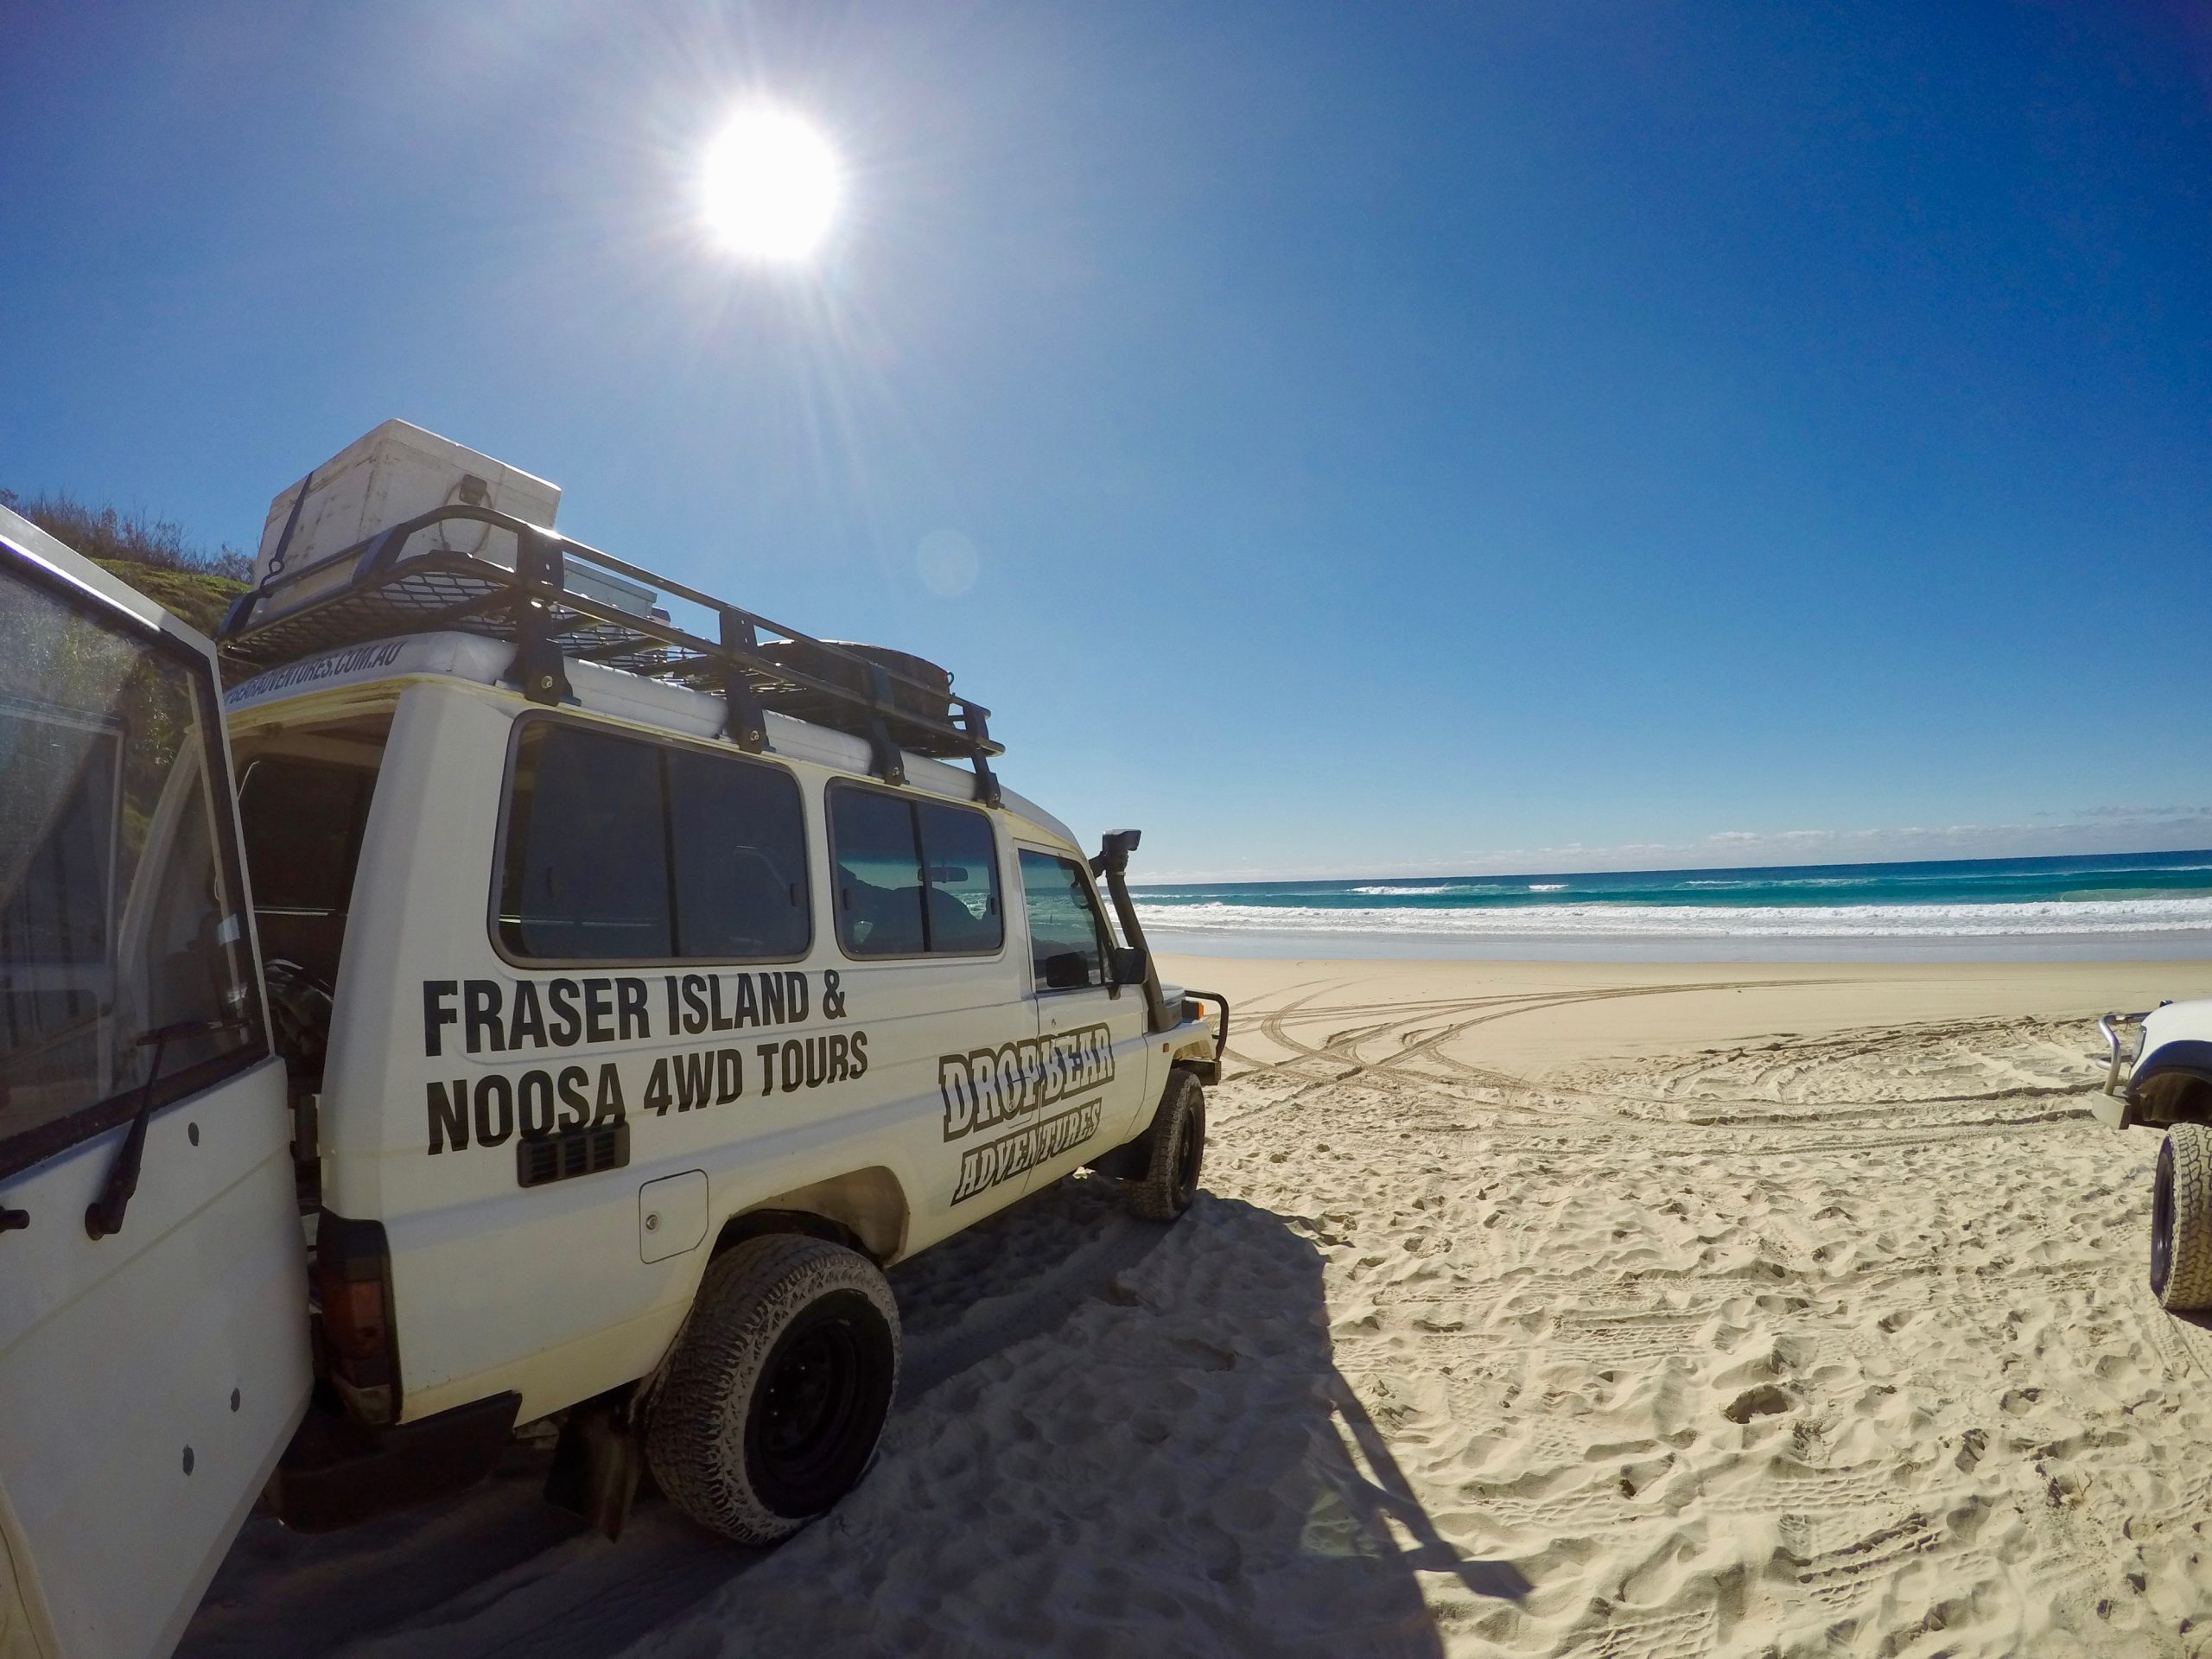 travel guide east coast australia